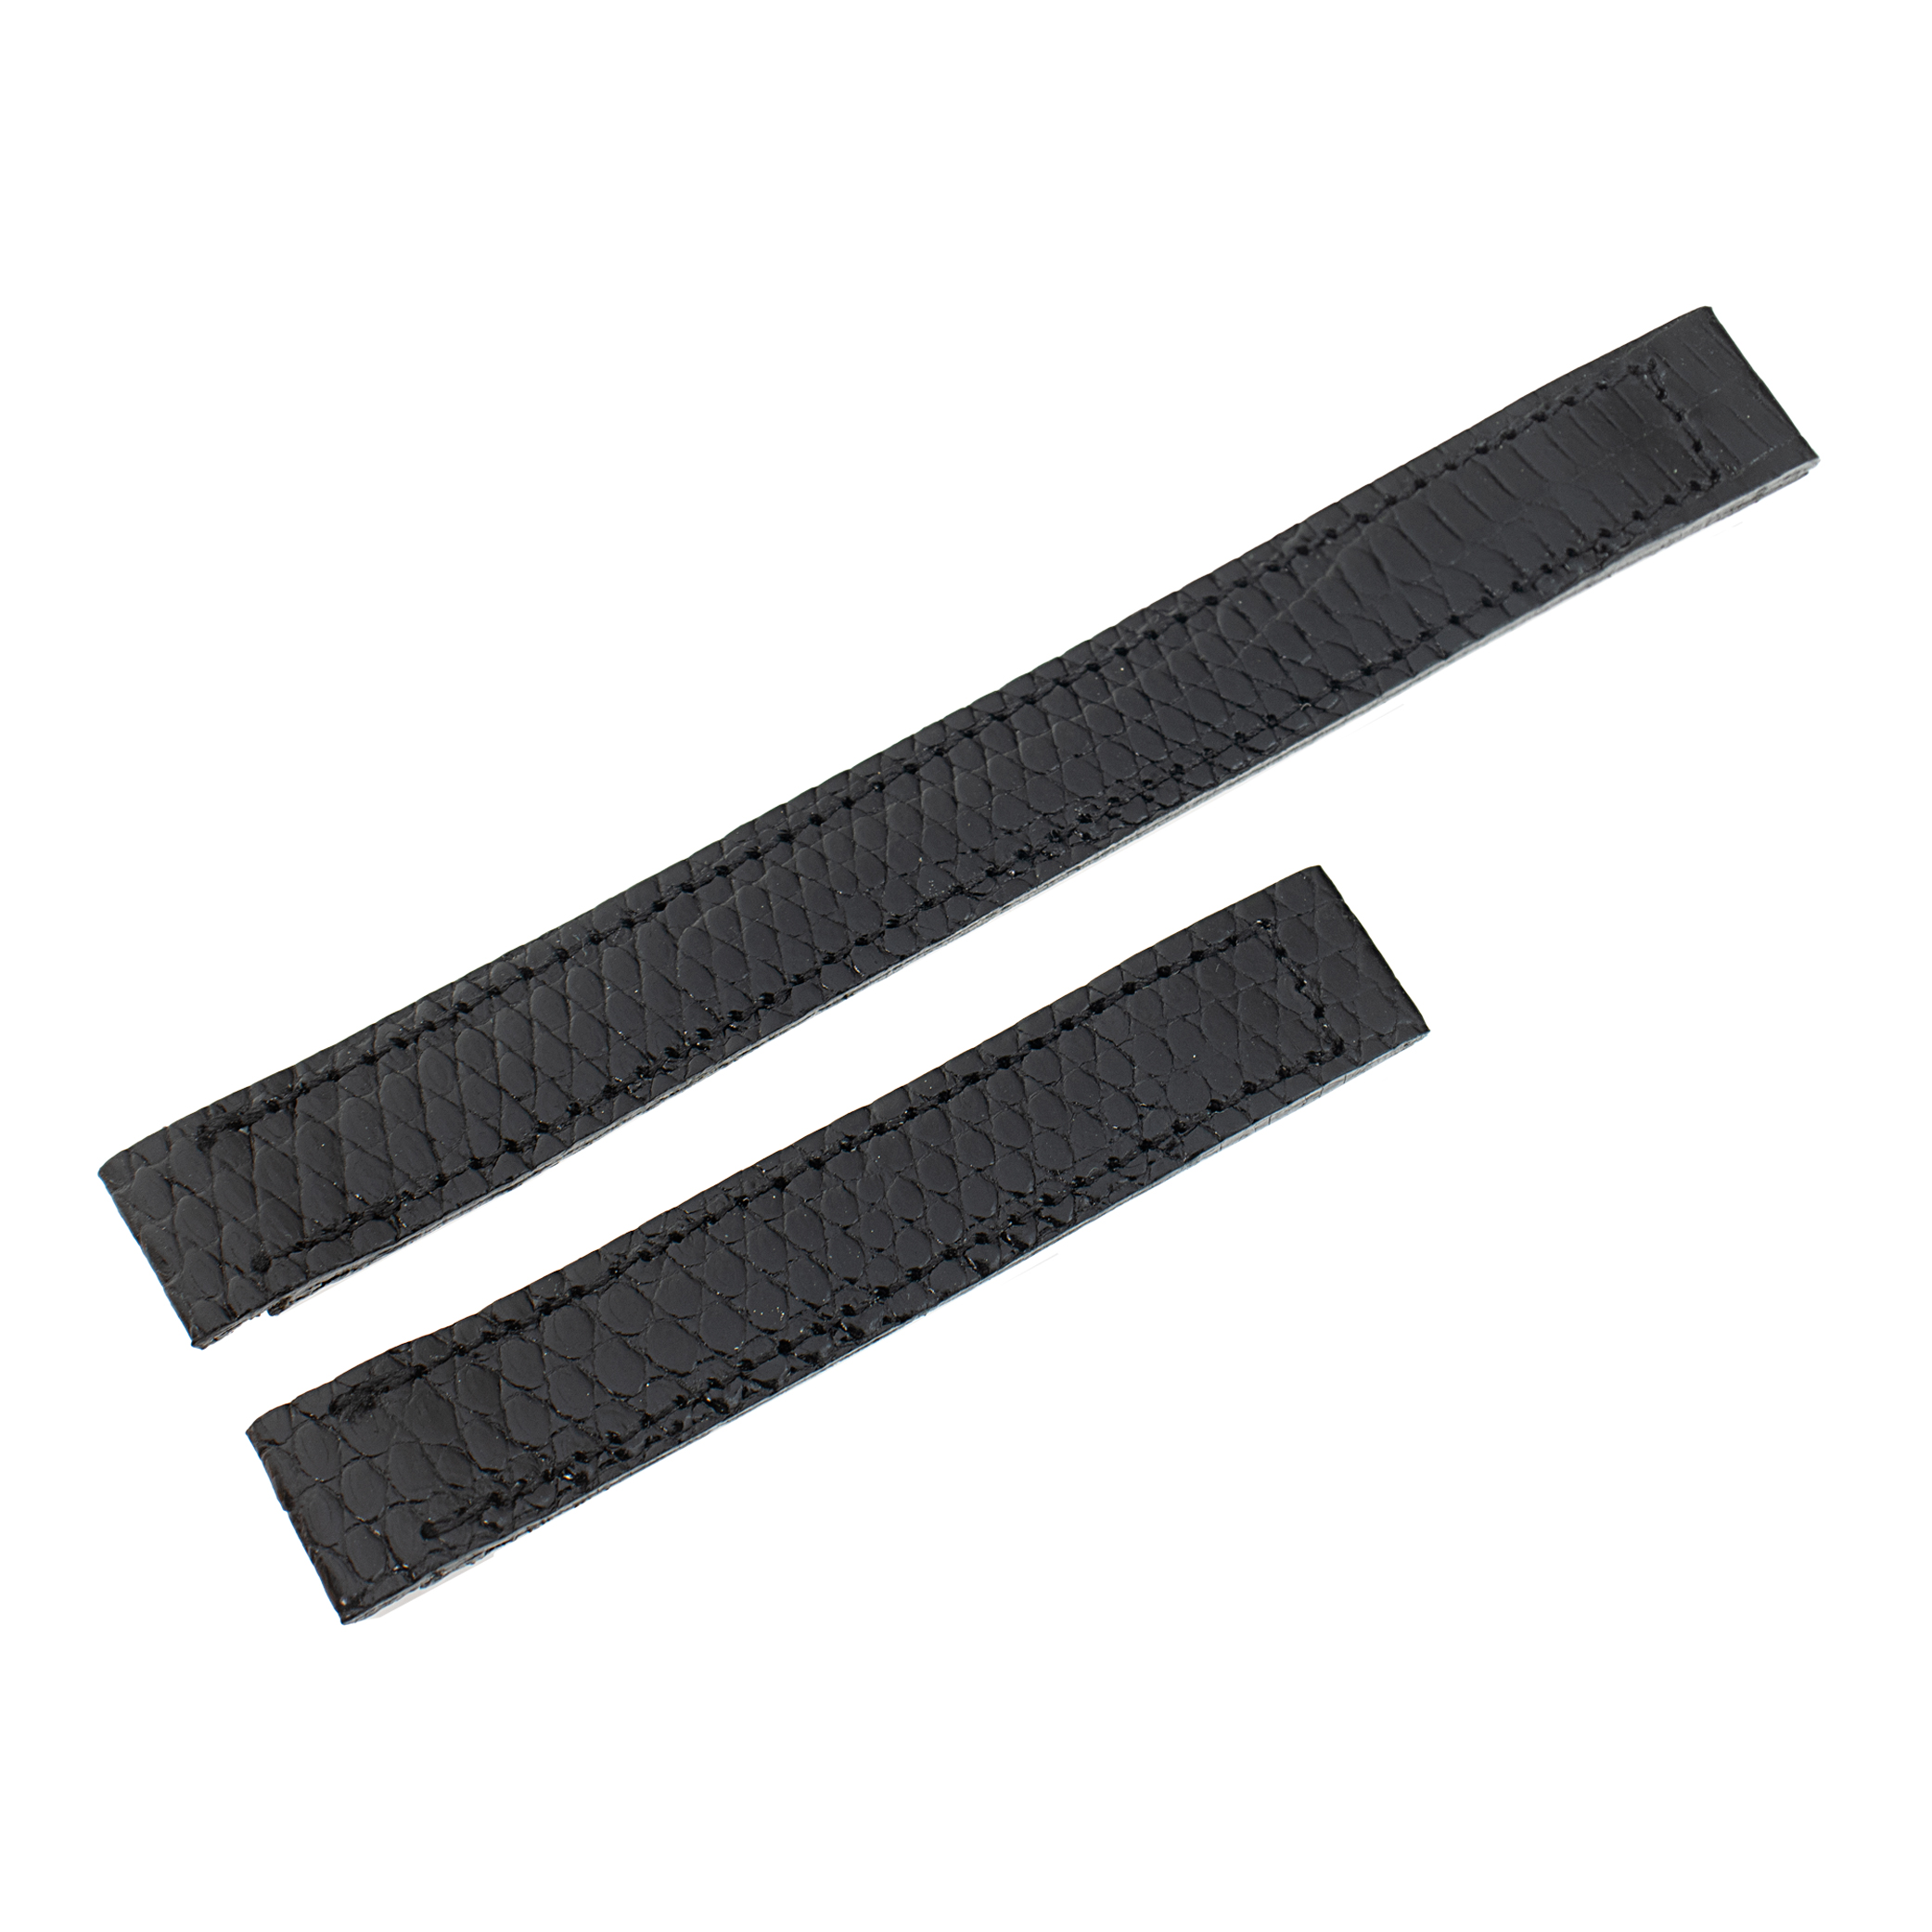 Cartier black lizard strap for deployant buckle 12 x 12 mm. Long end 4 in. Short end 2.5 in (Default)